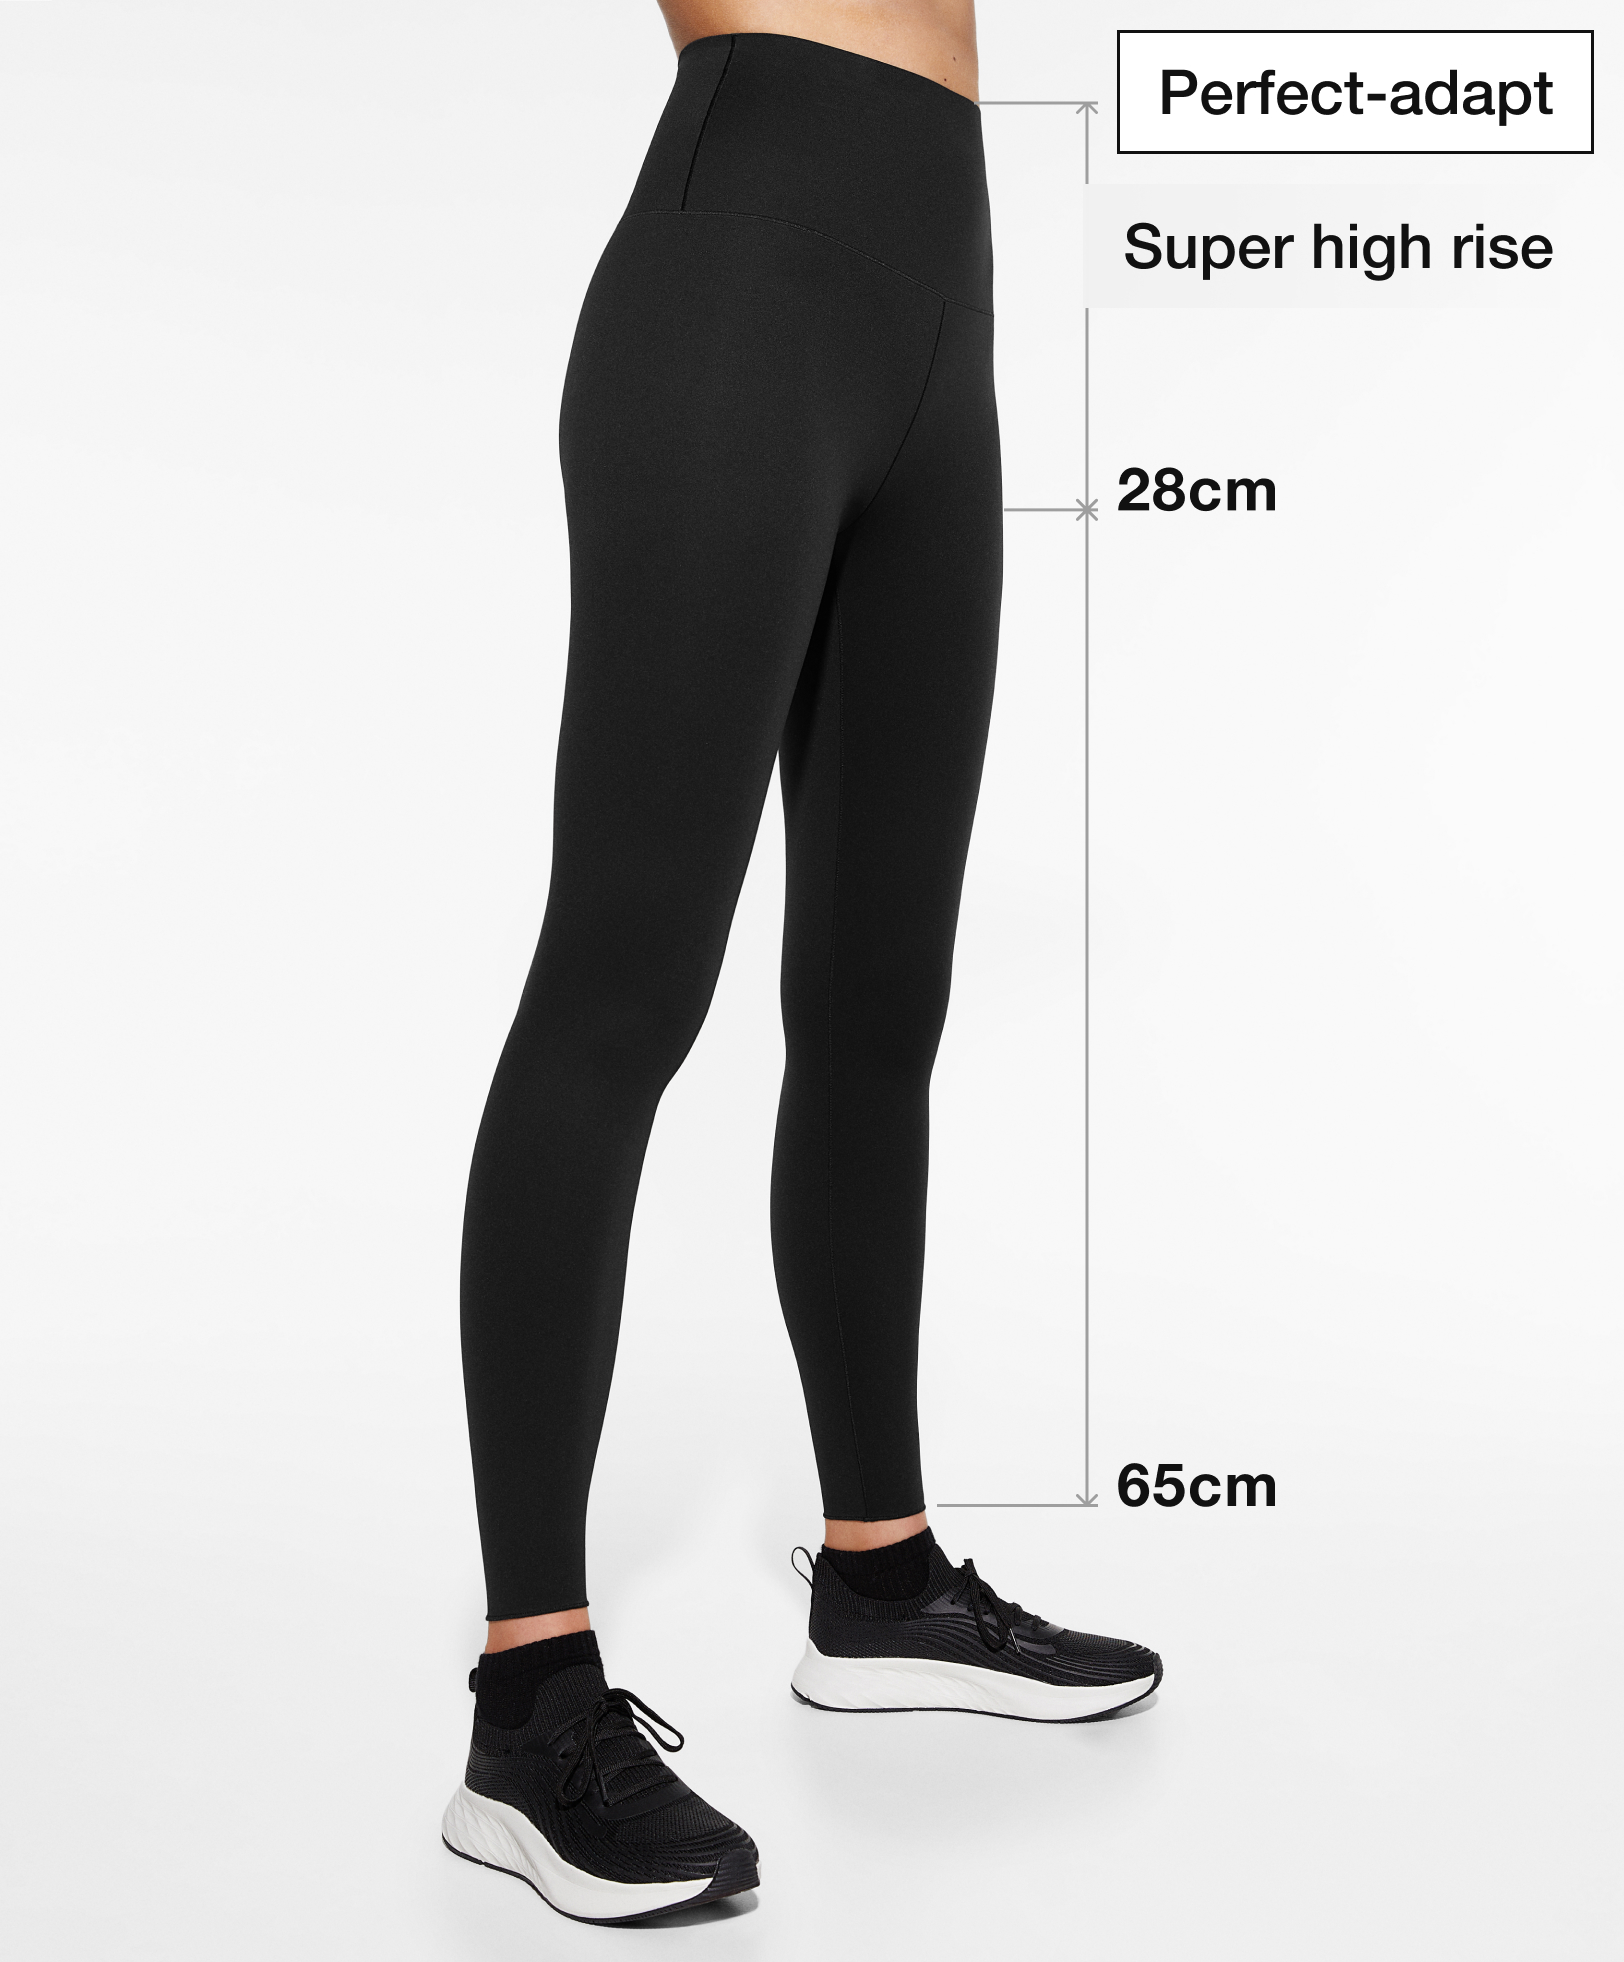 Knöchellange Perfect Adapt Leggings, Super High Rise, 65 cm